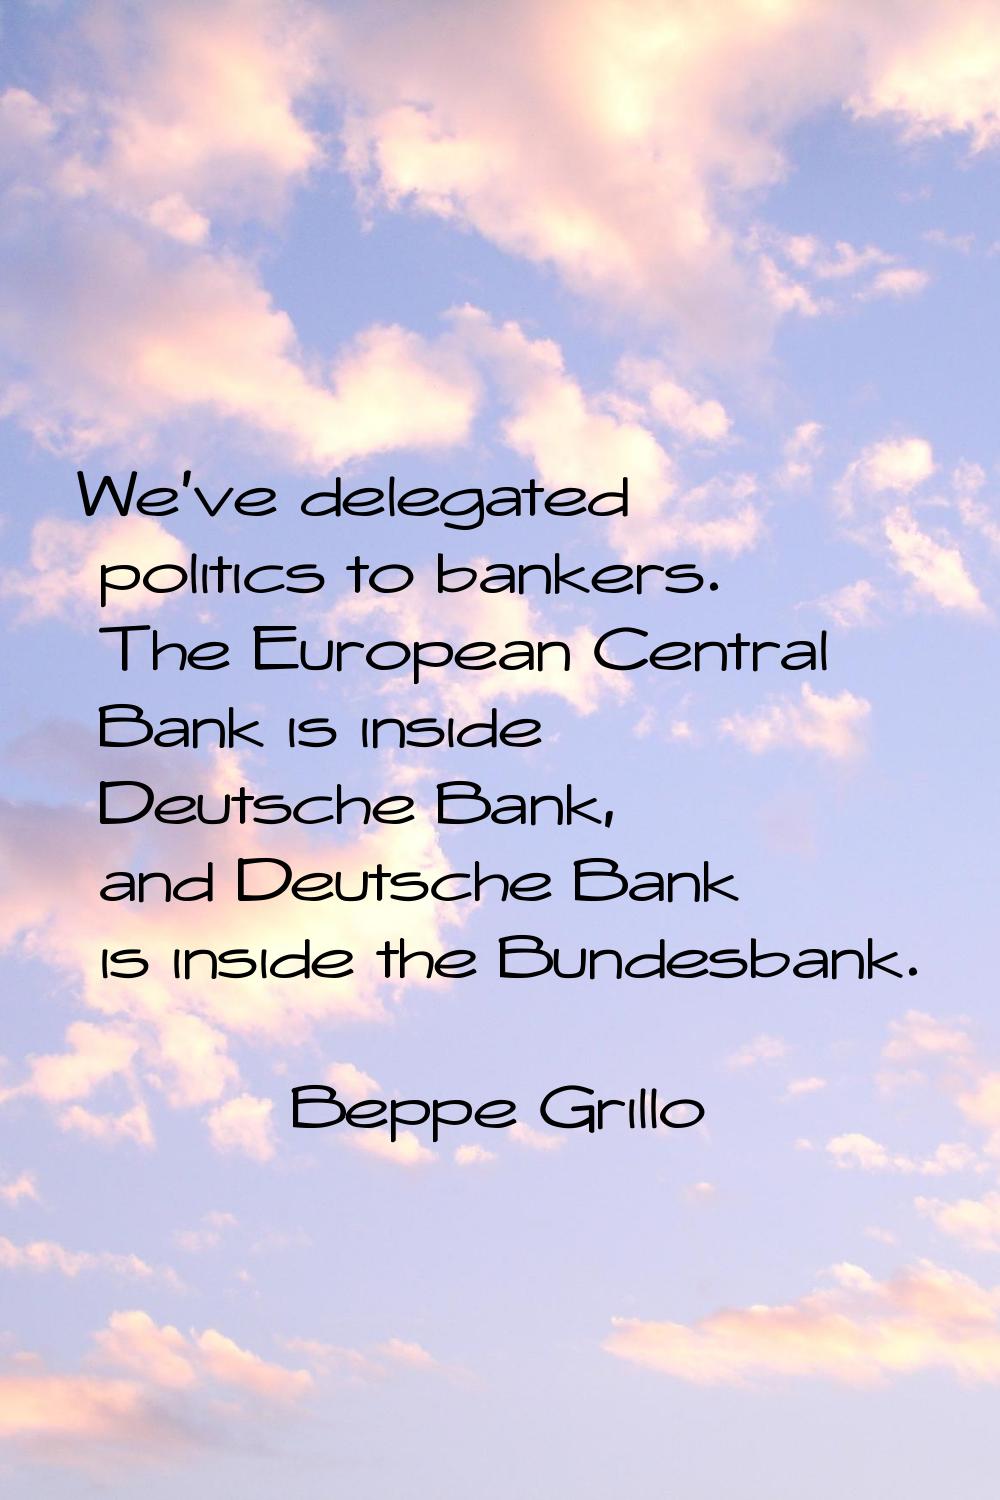 We've delegated politics to bankers. The European Central Bank is inside Deutsche Bank, and Deutsch